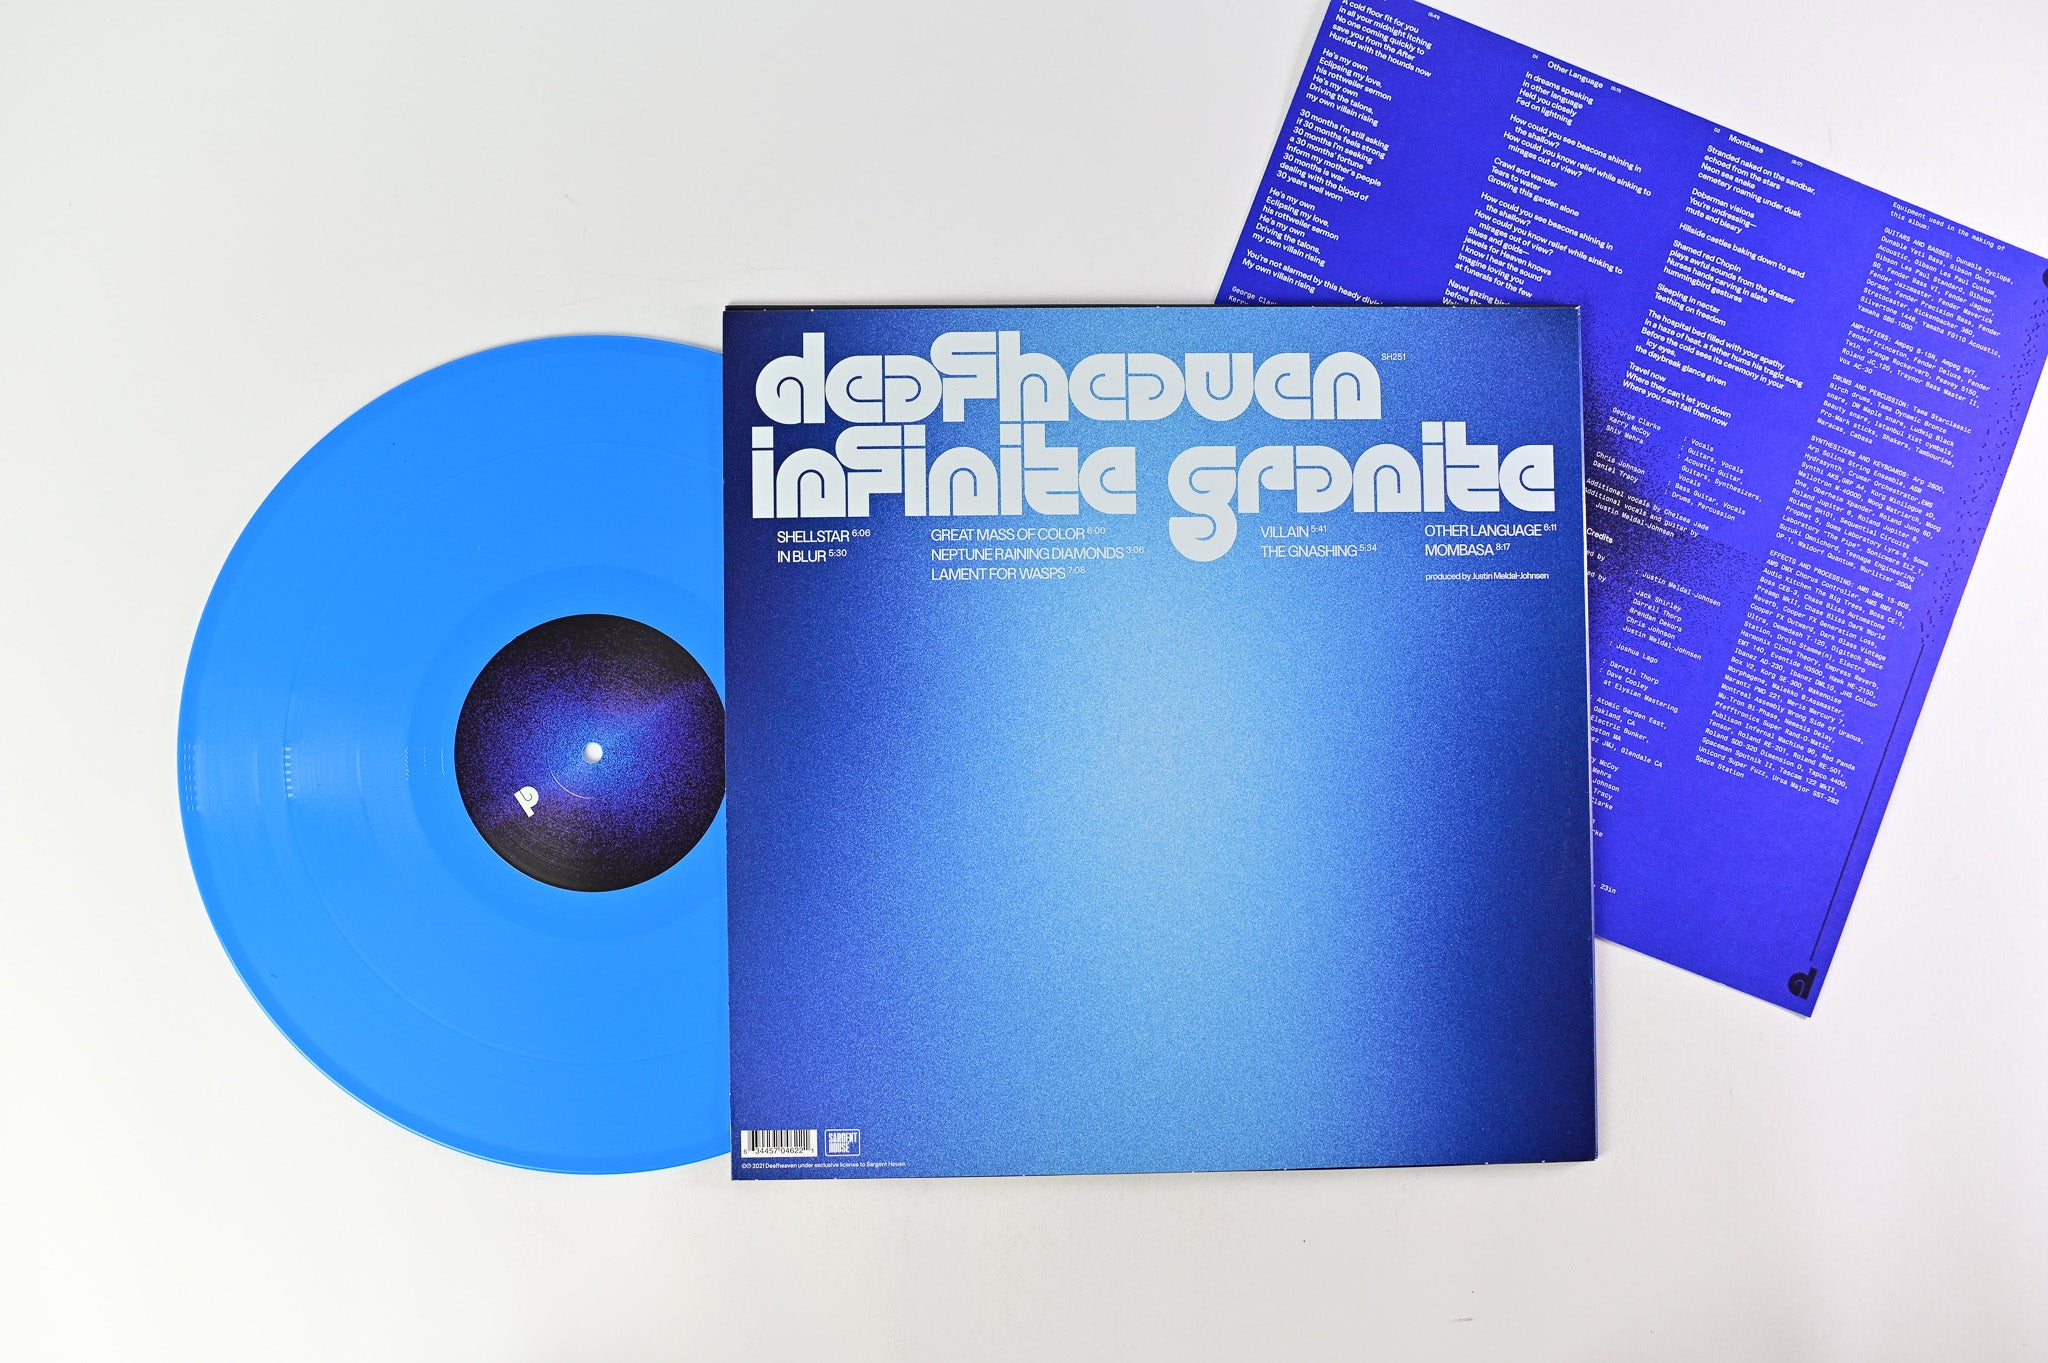 Deafheaven - Infinite Granite on Sargent House - Blue Vinyl